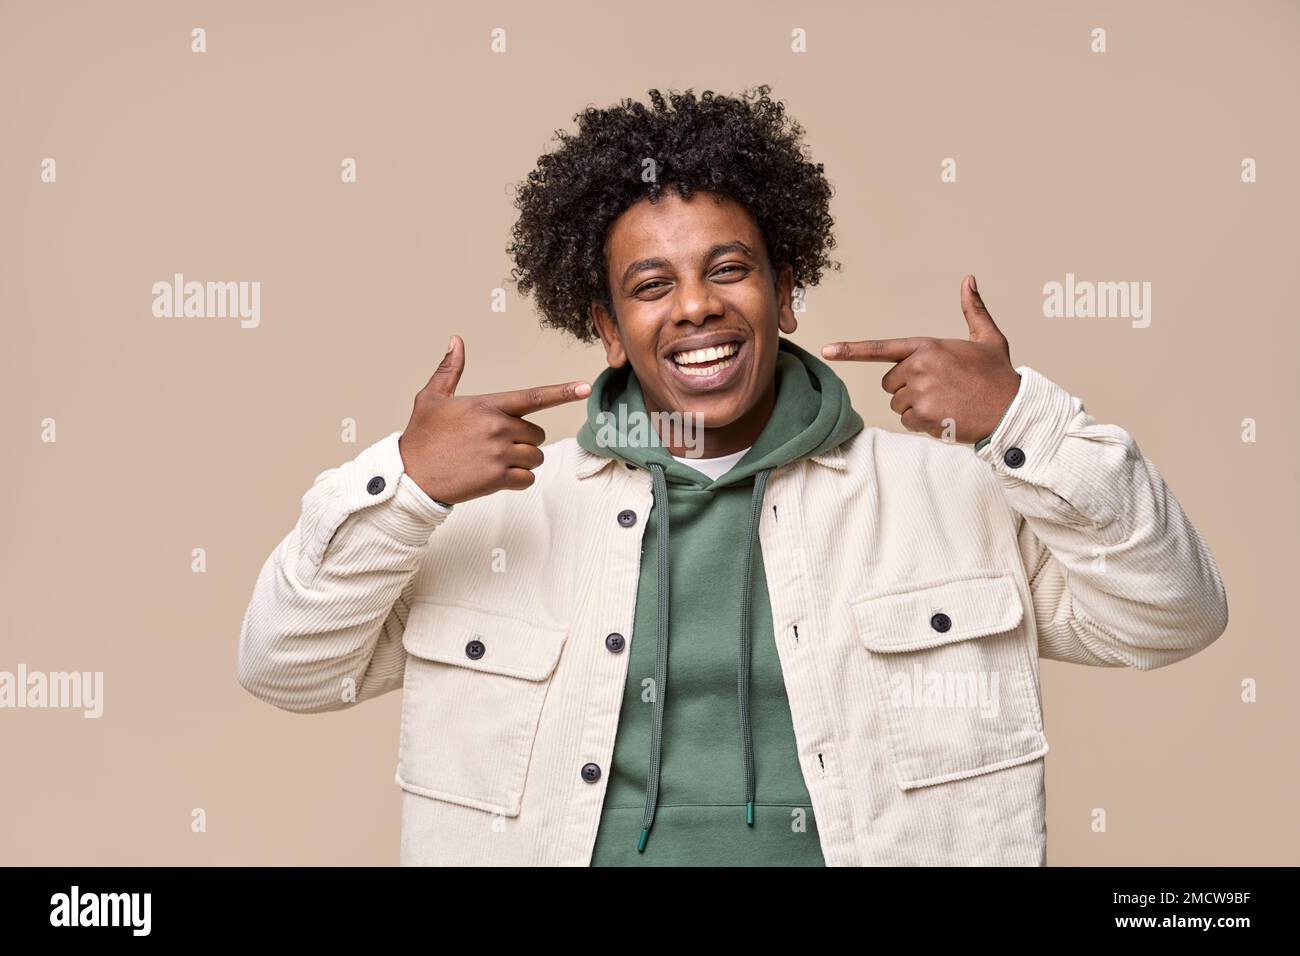 Smiling African guy pointing at dental white teeth advertising whitening. Stock Photo